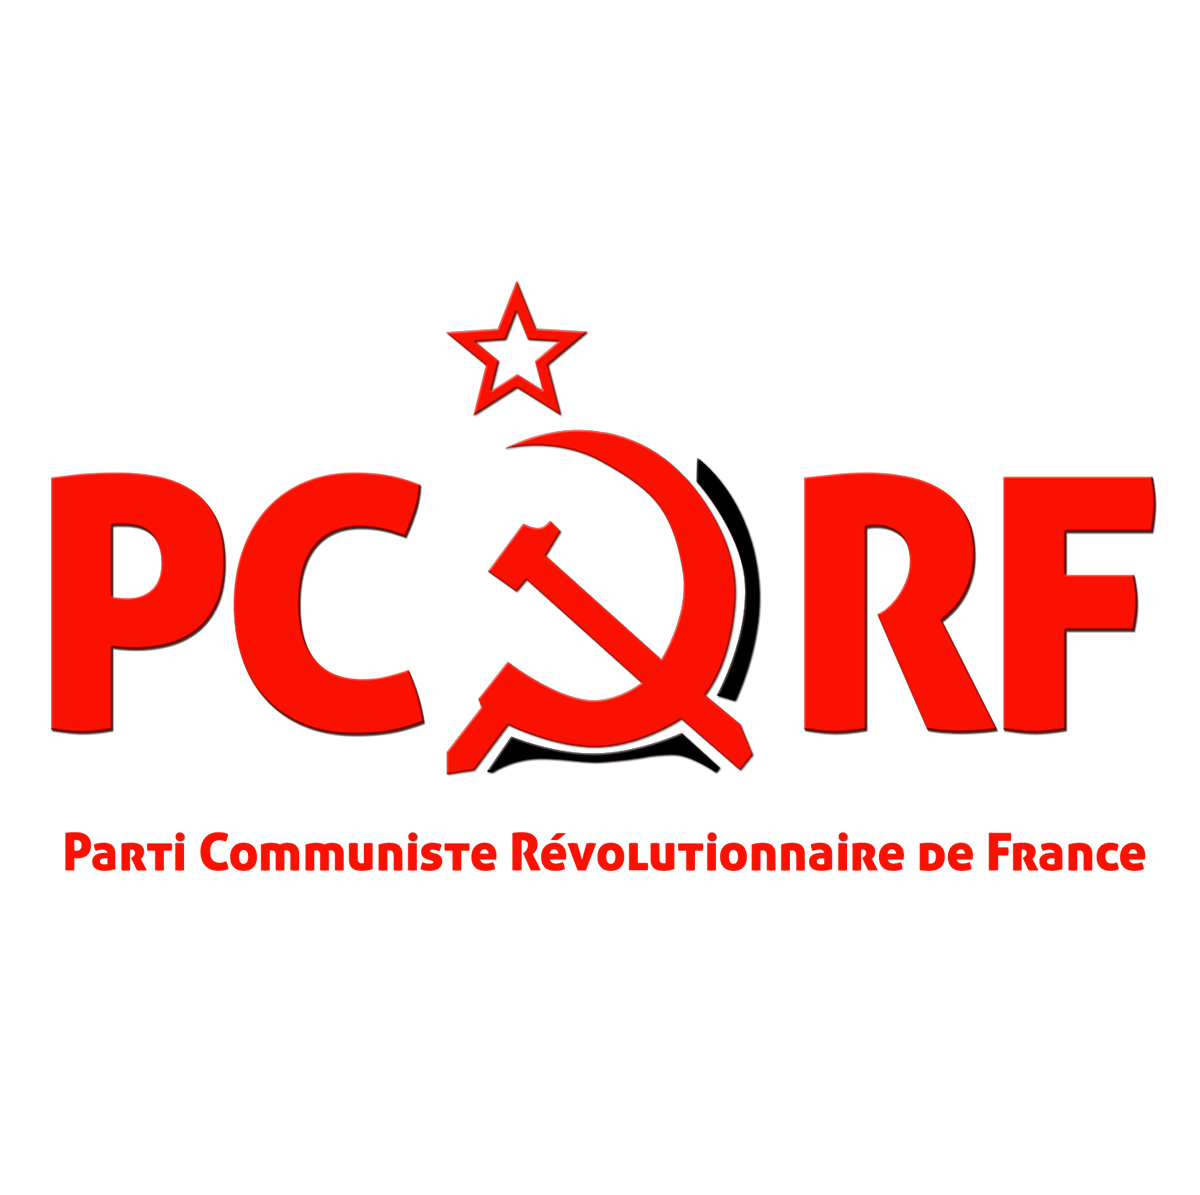 france_communist revolutionary party of france